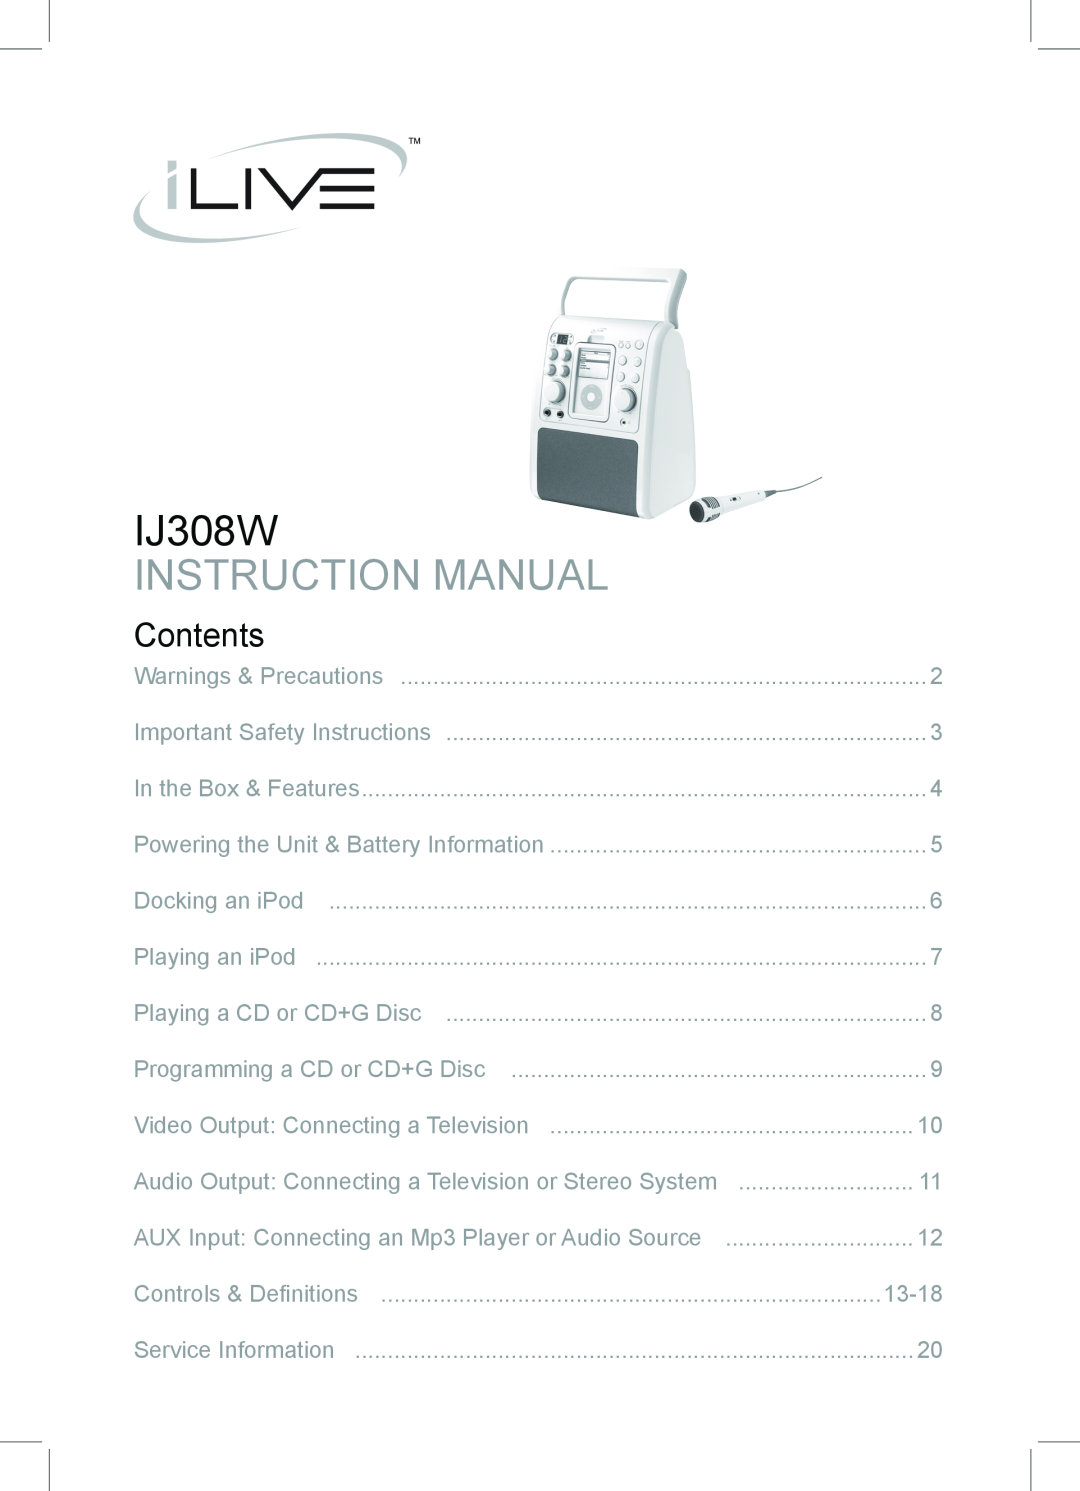 iLive IJ308W instruction manual Contents, 13-18 